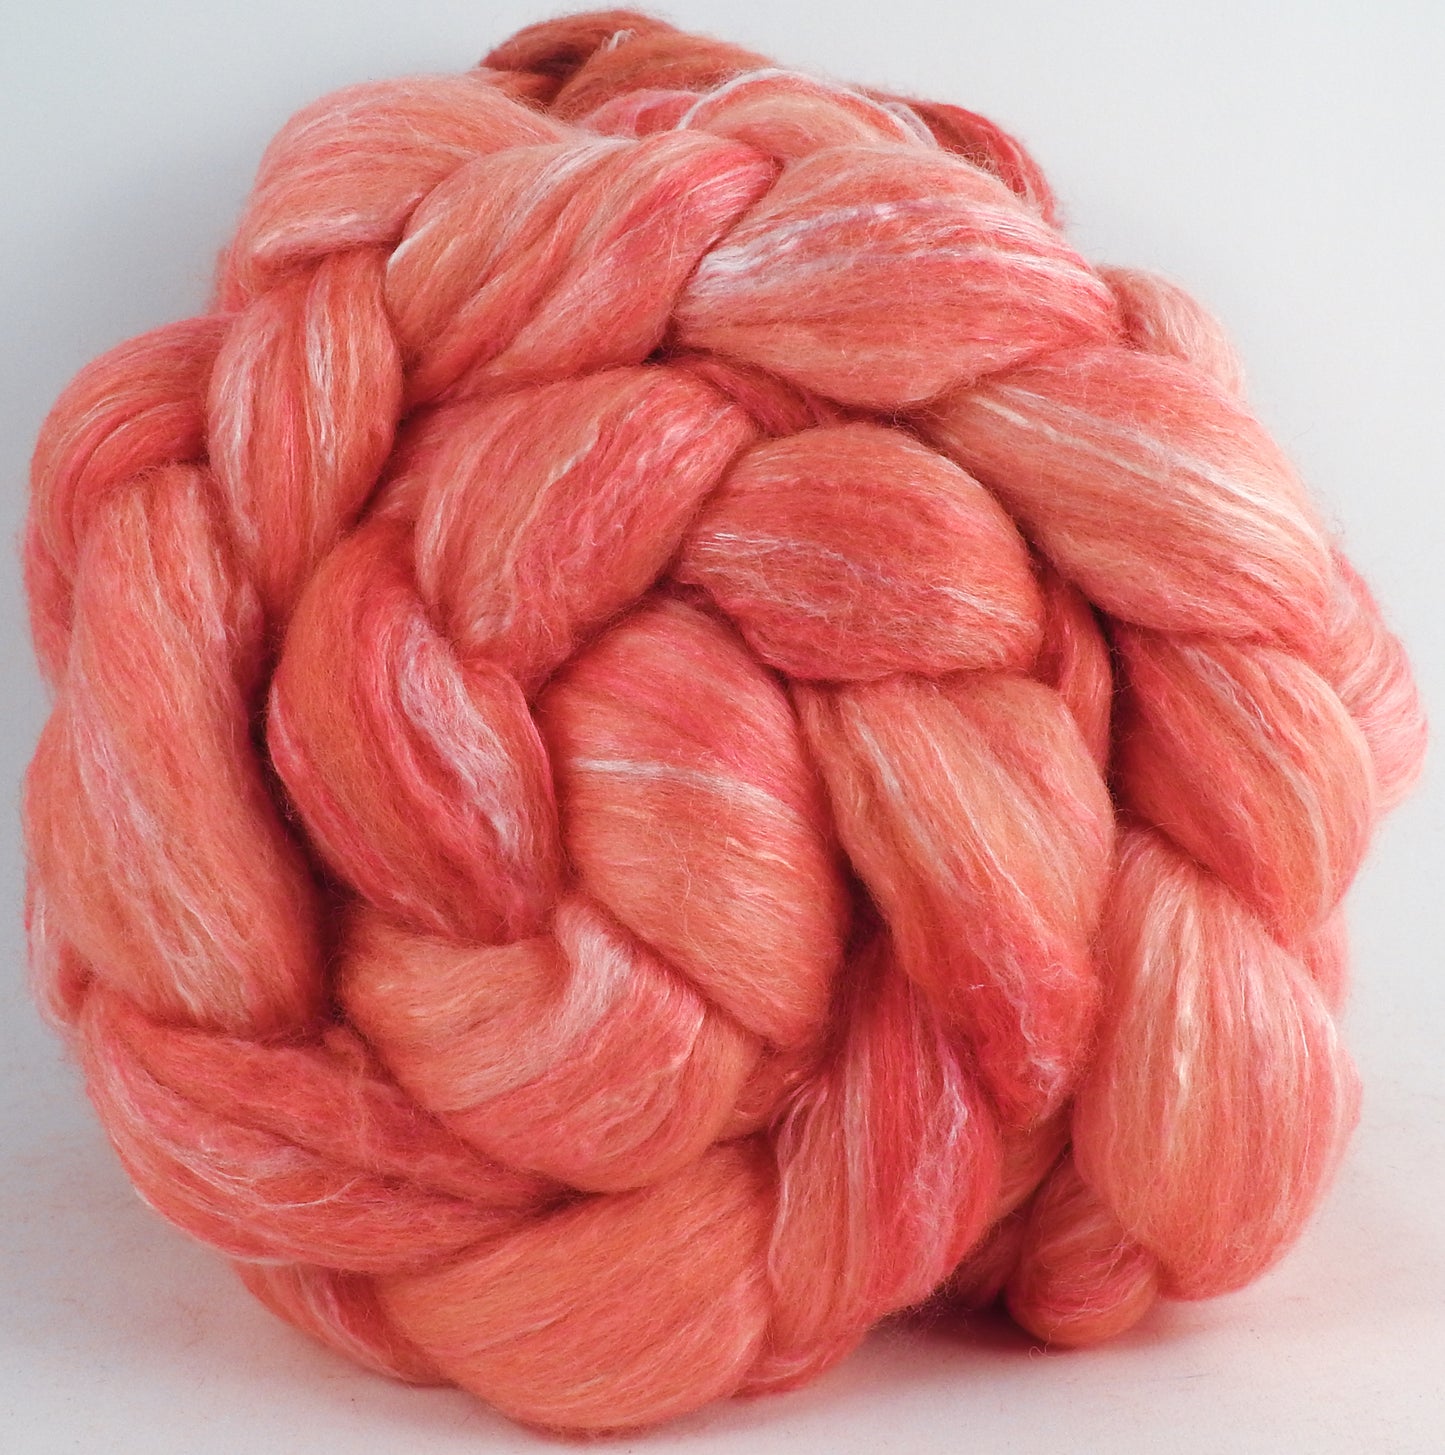 Batt in a Braid #45 - Flamingo (6.2 oz.) - Corriedale/Mulberry Silk/Rose Fiber (60/20/20)